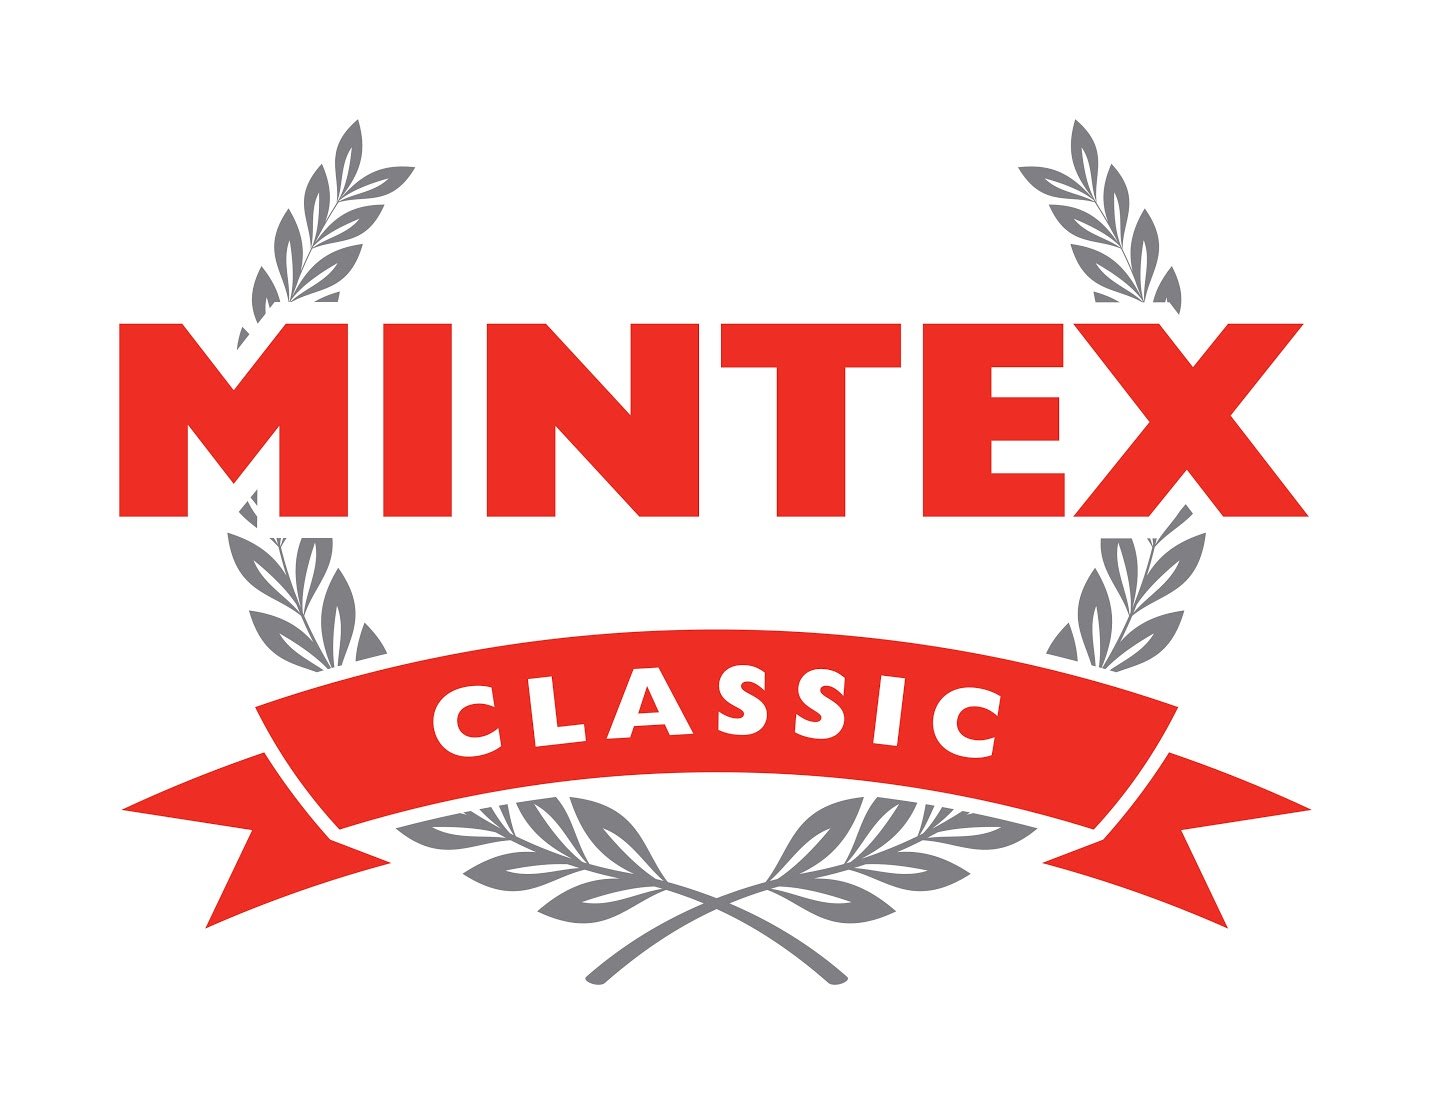 MINTEX CLASSIC